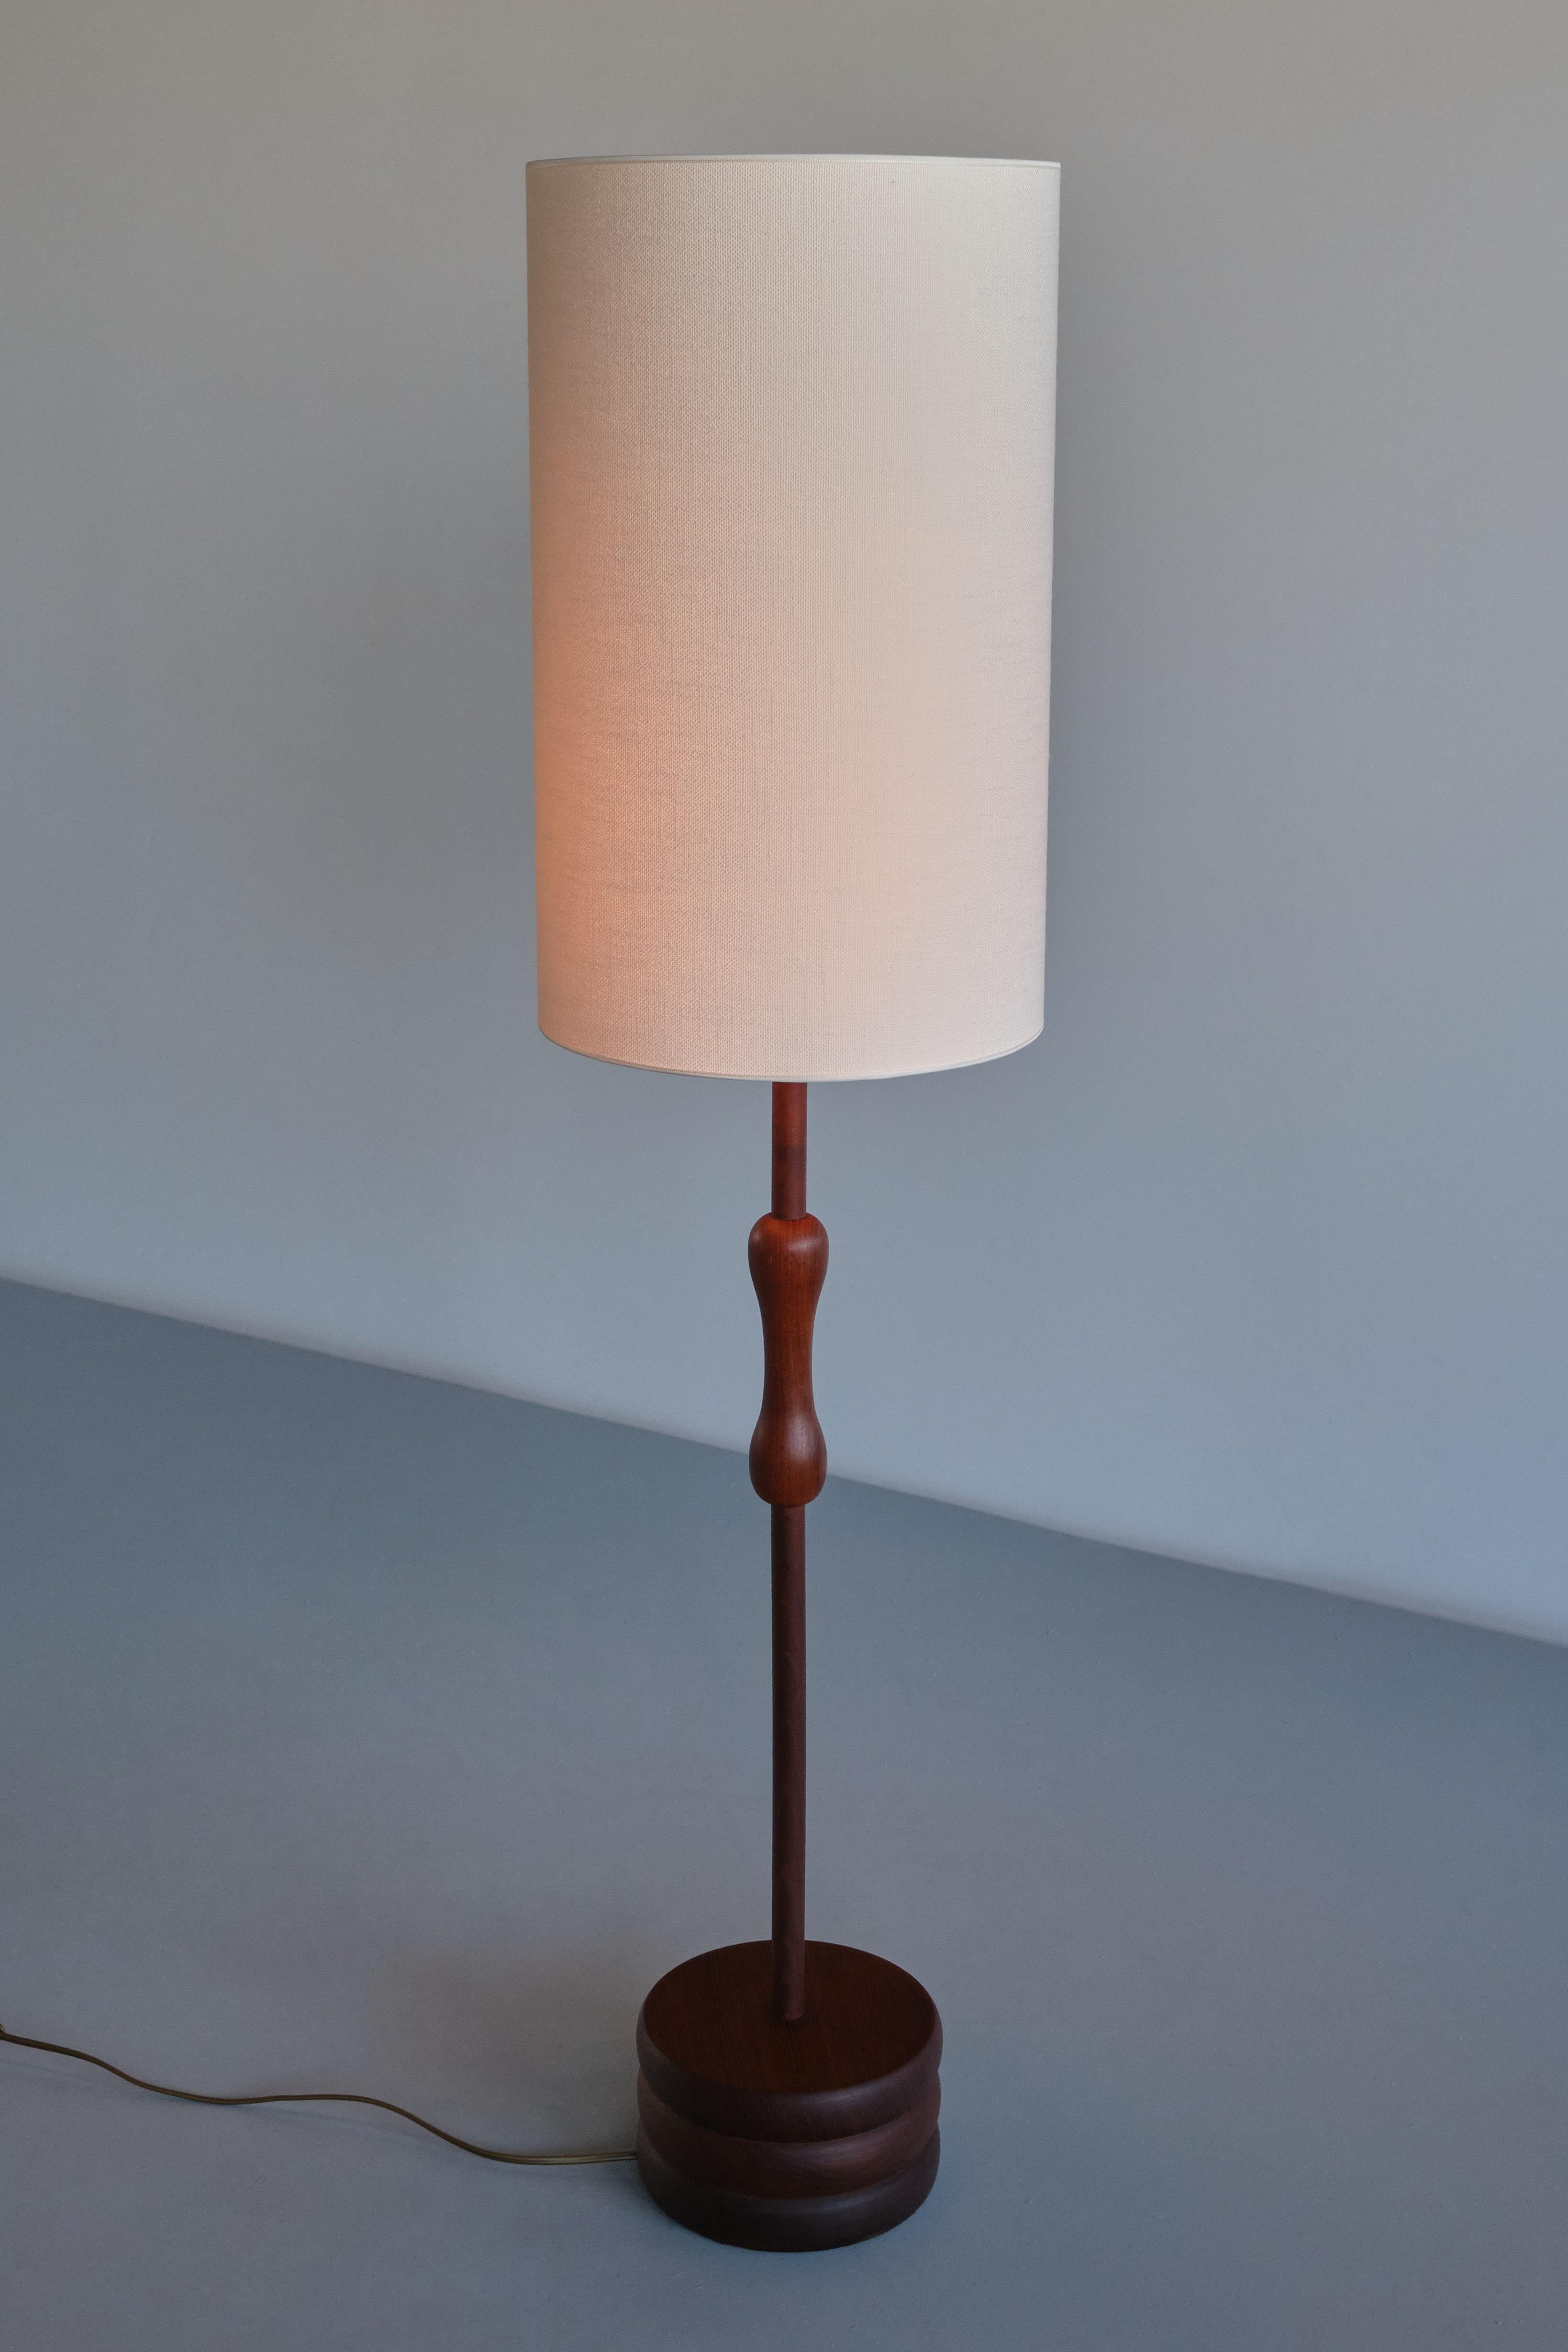 Organic Modern Floor / Table Lamp in Solid Teak Wood, Sweden, 1950s For Sale 4